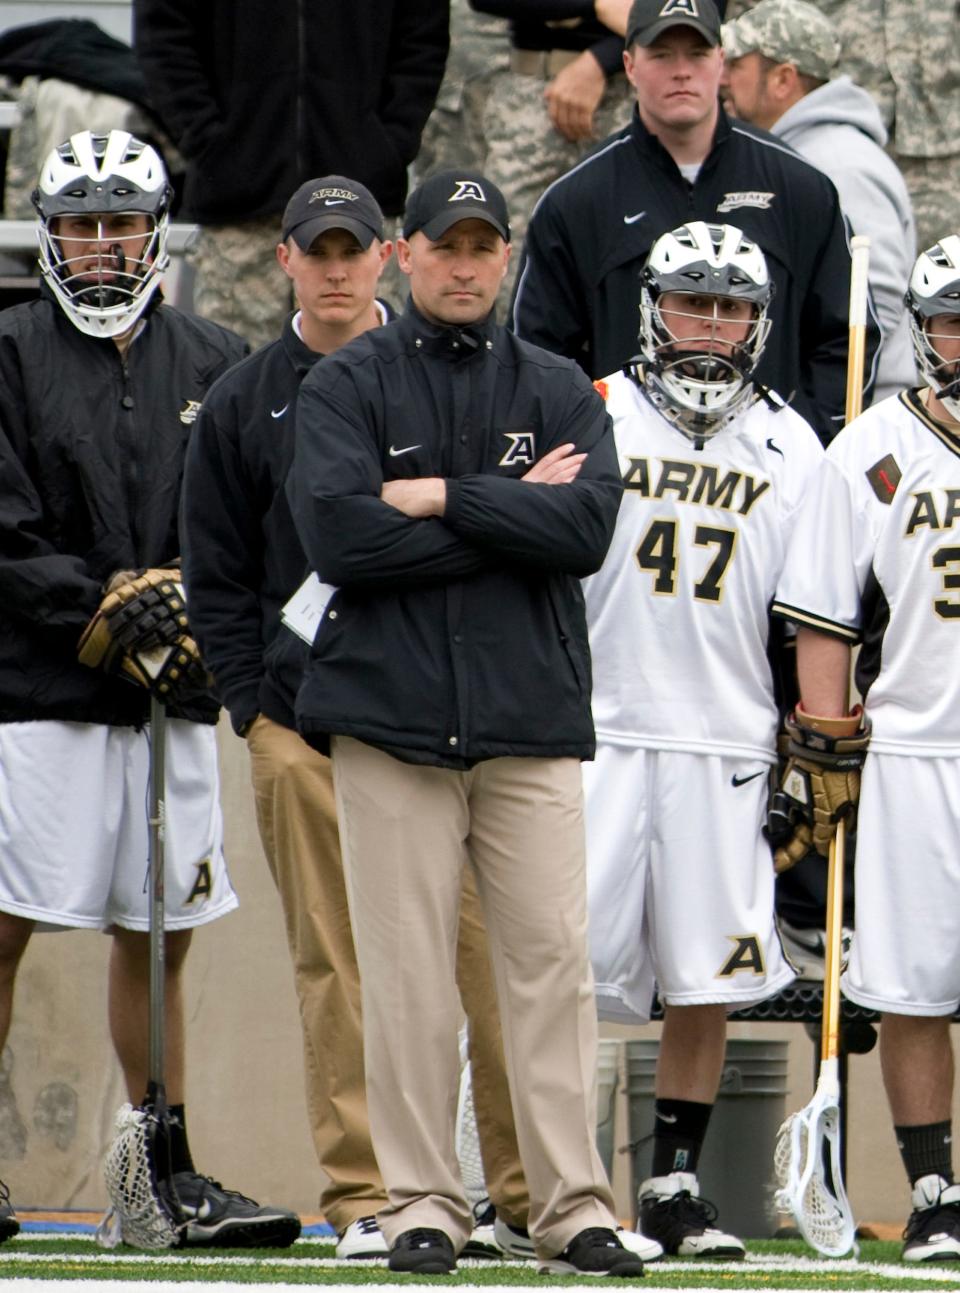 Joe Alberici heads into his 18th season as head coach of the Army men's lacrosse team. ARMY ATHLETICS